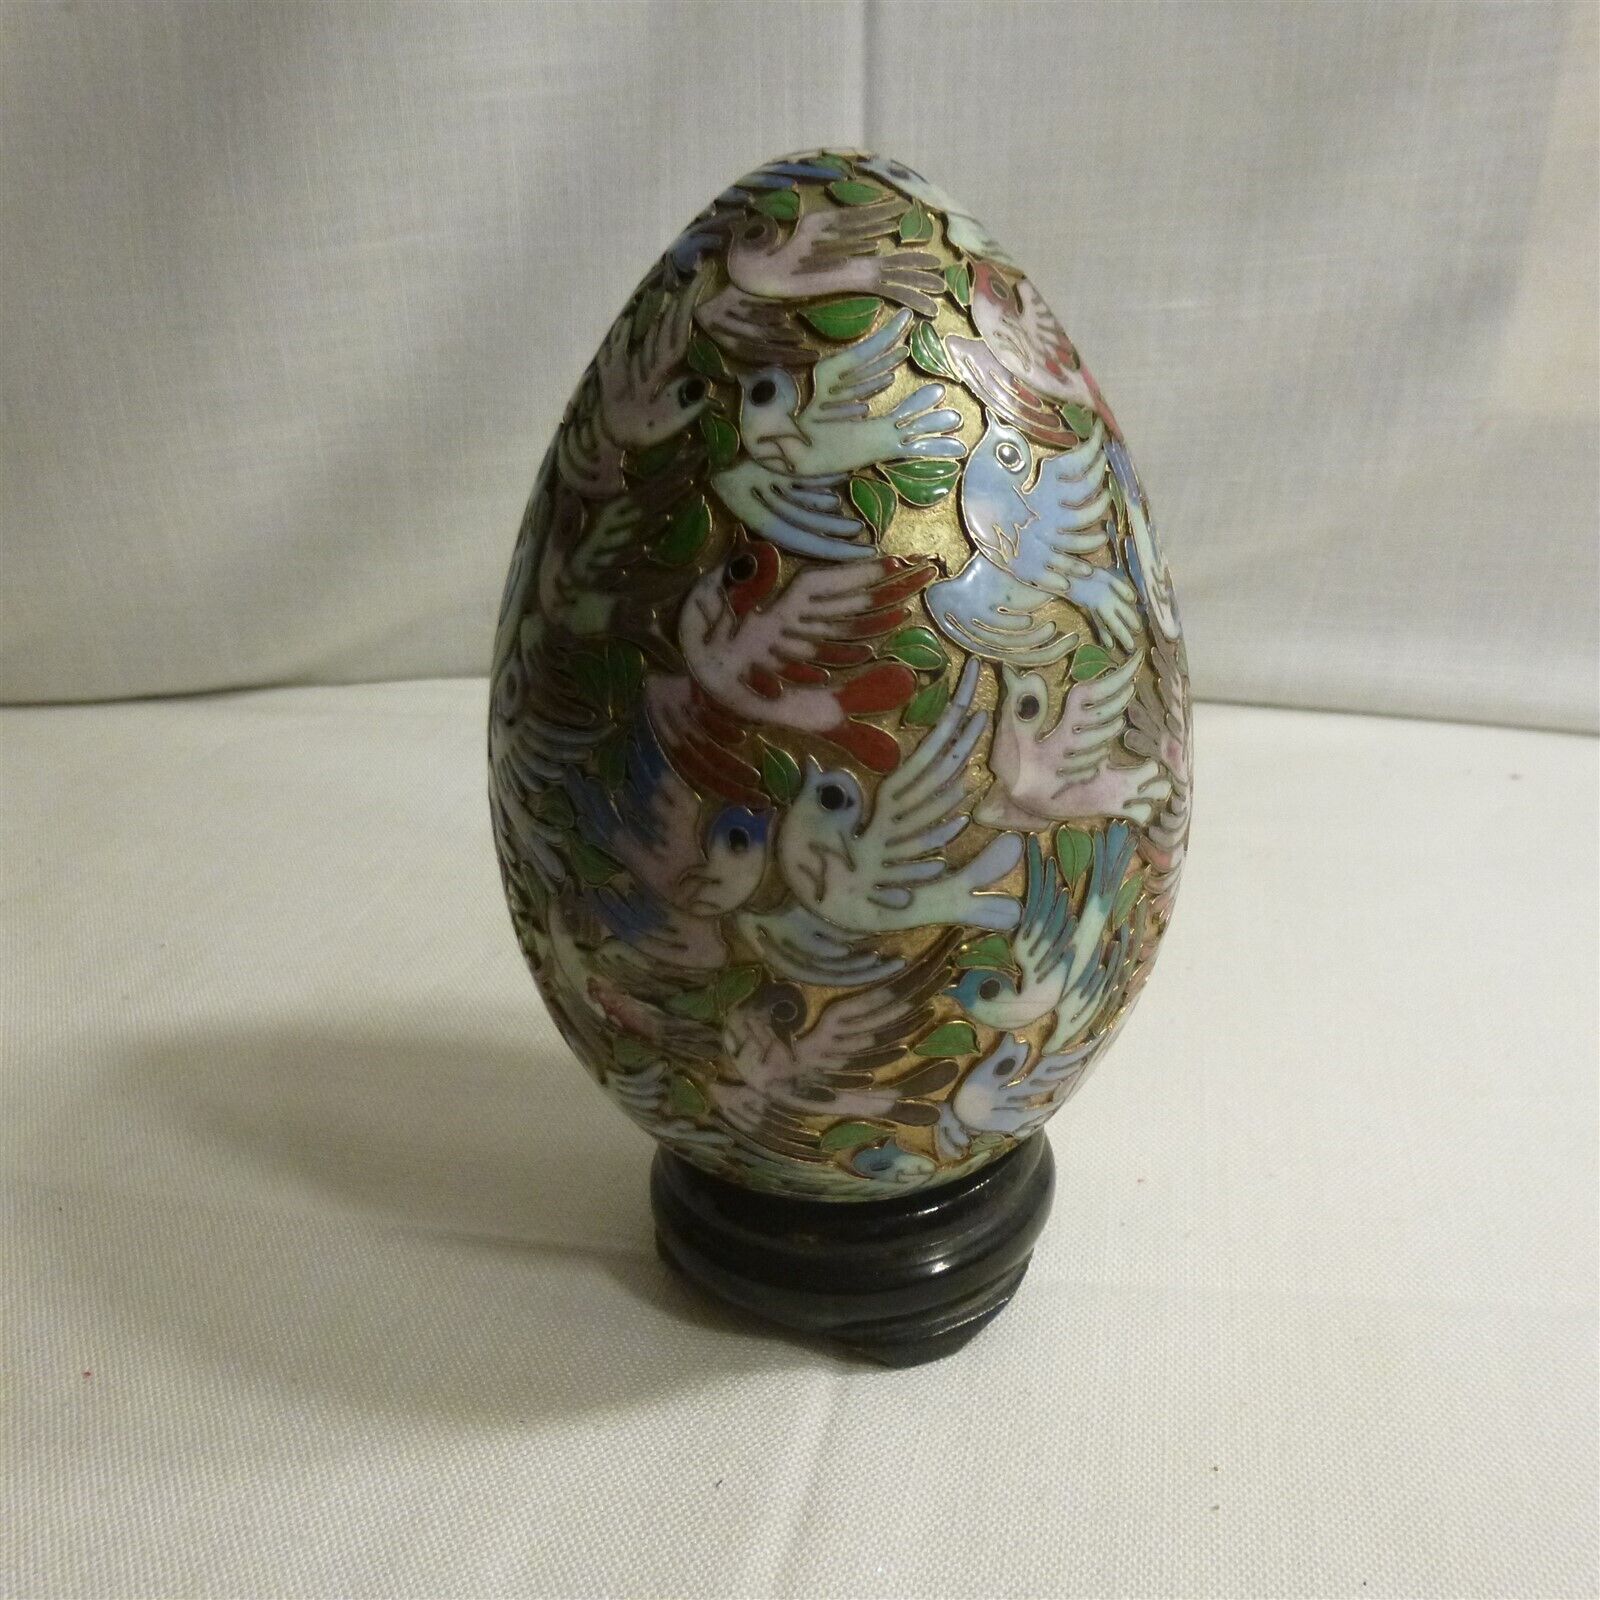 Rare Vintage Cloisonné egg on a wooden stand - with multicolor birds - EUC